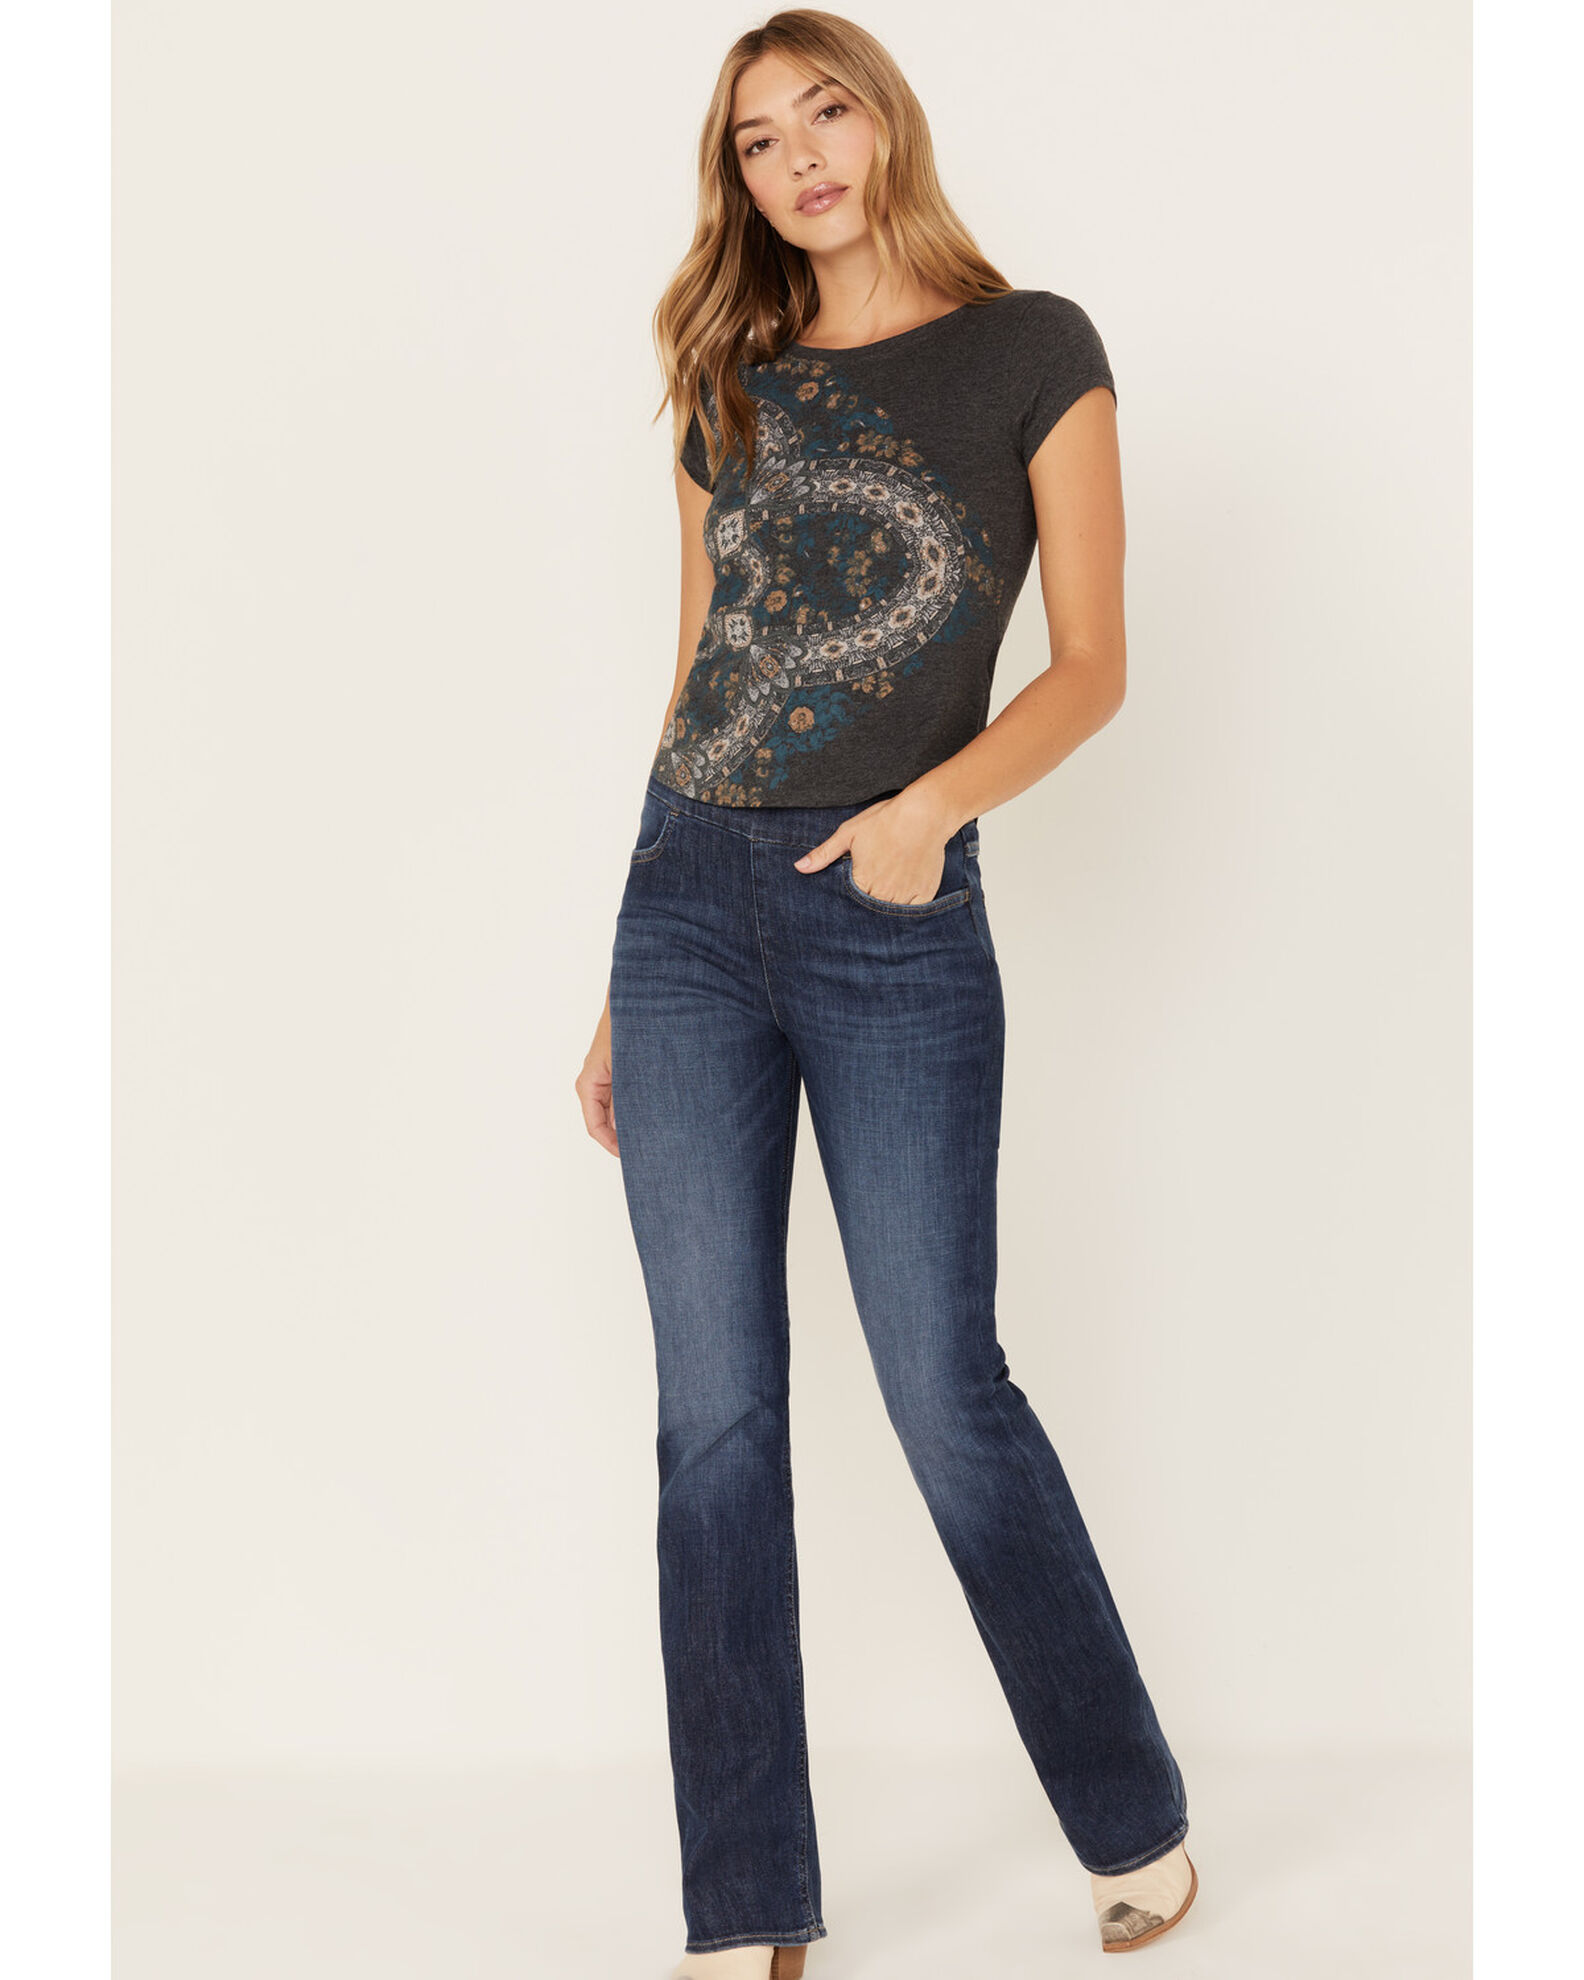 Product Name: Wrangler Retro Women's Medium Wash High Rise Pull On Norah  Bootcut Jeans